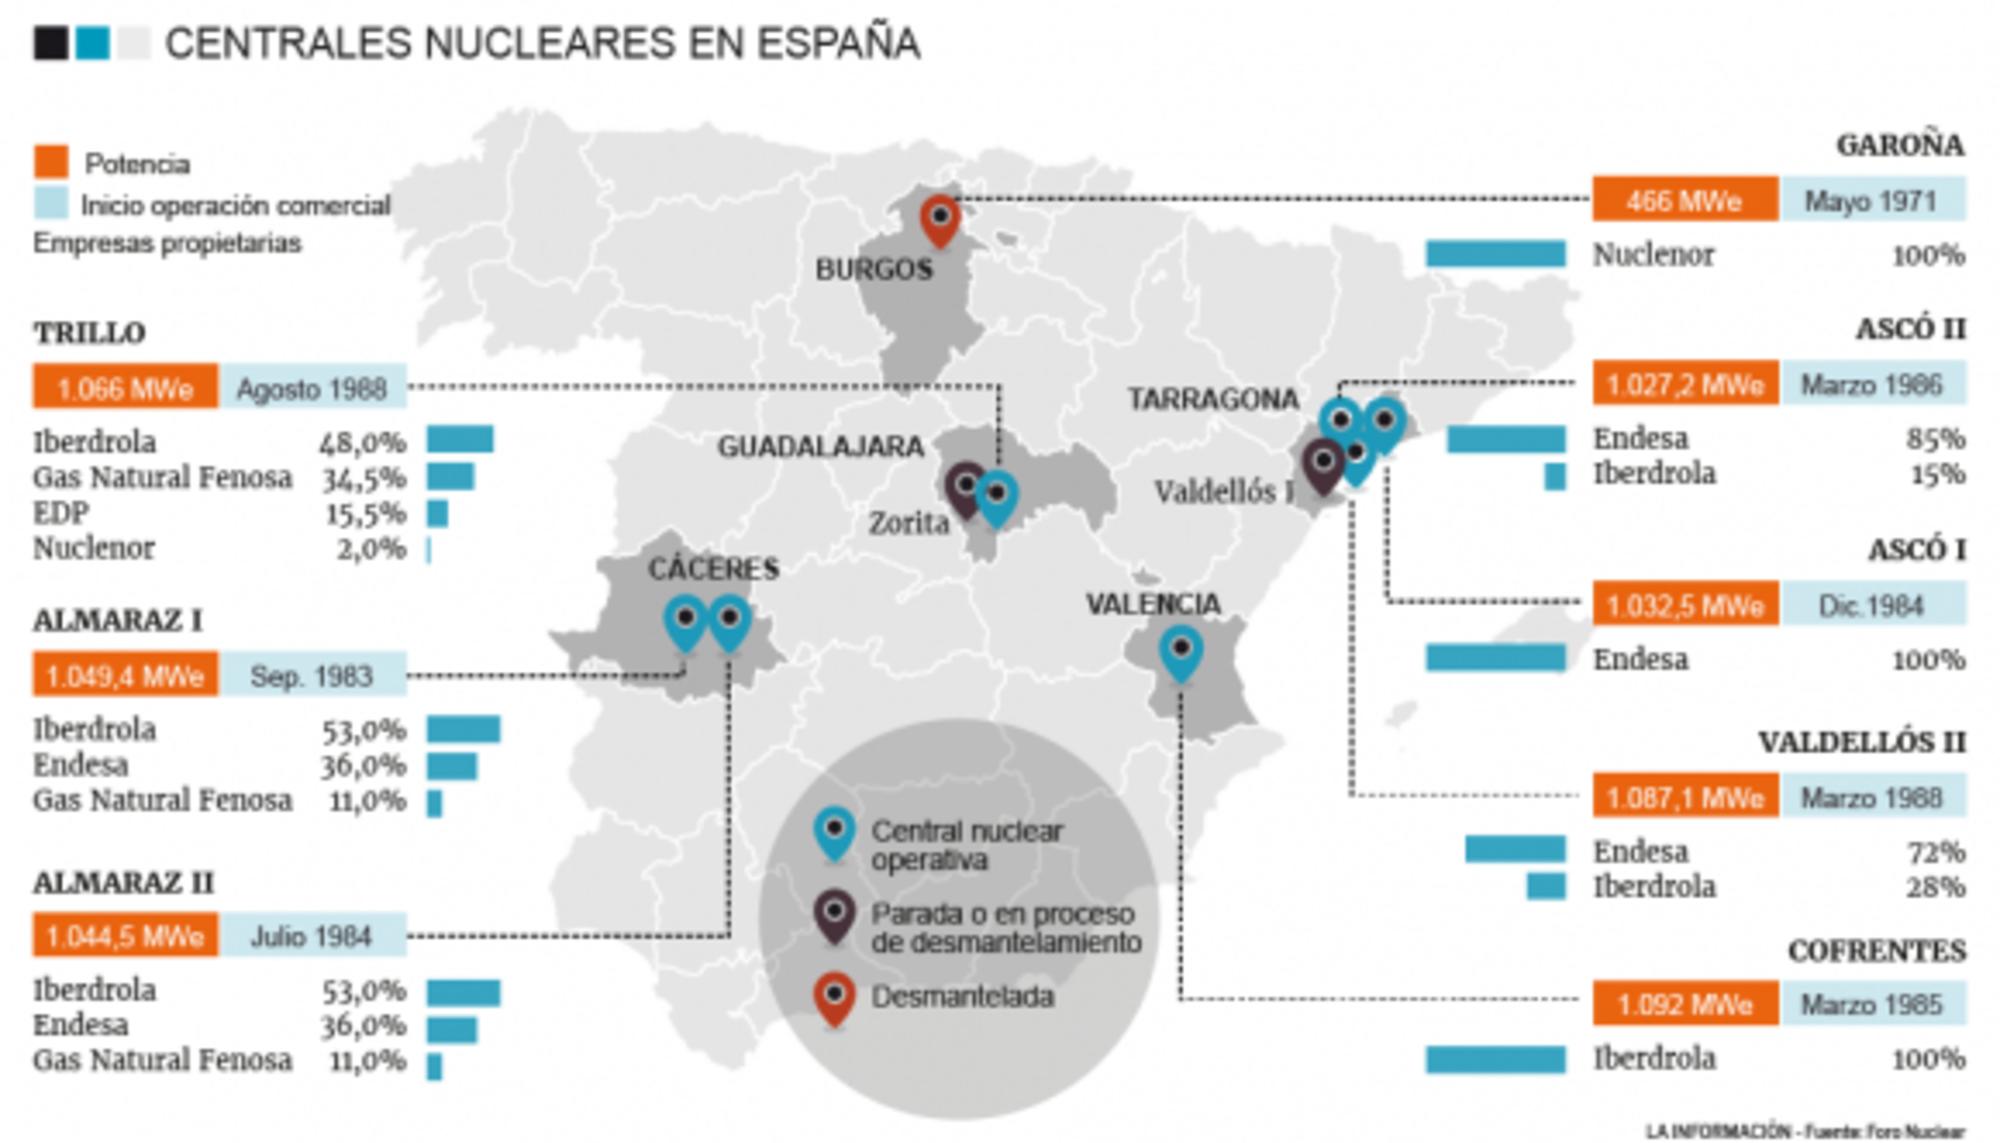 Centrales nucleares en España. Fuente: Foro Nuclear